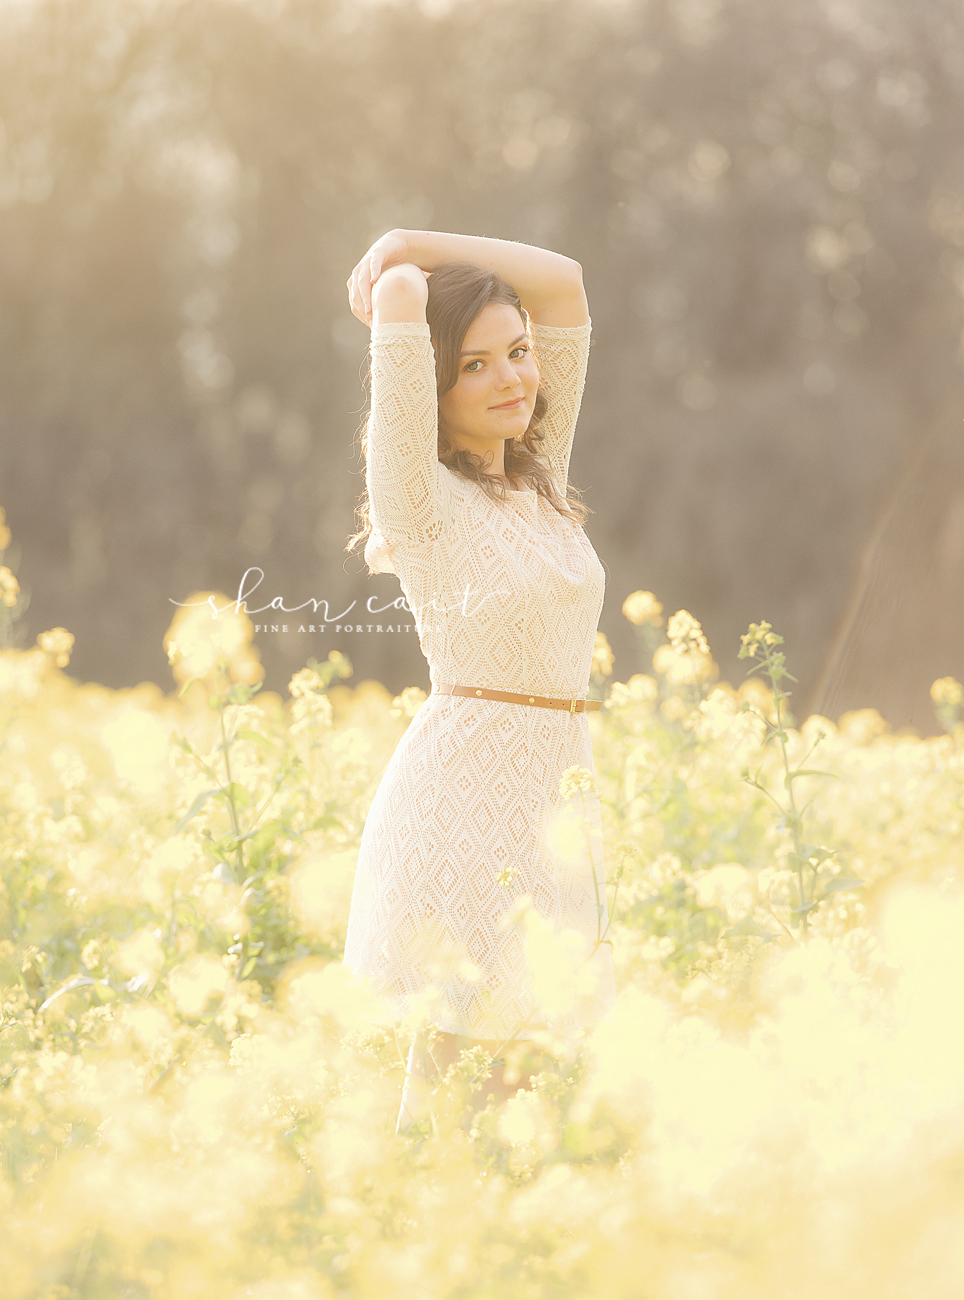 flowers-Sacramento High School Senior Photographer-Flowers-fields-natural-el dorado hills high school senior-photographer-sun flare-gorgeous light